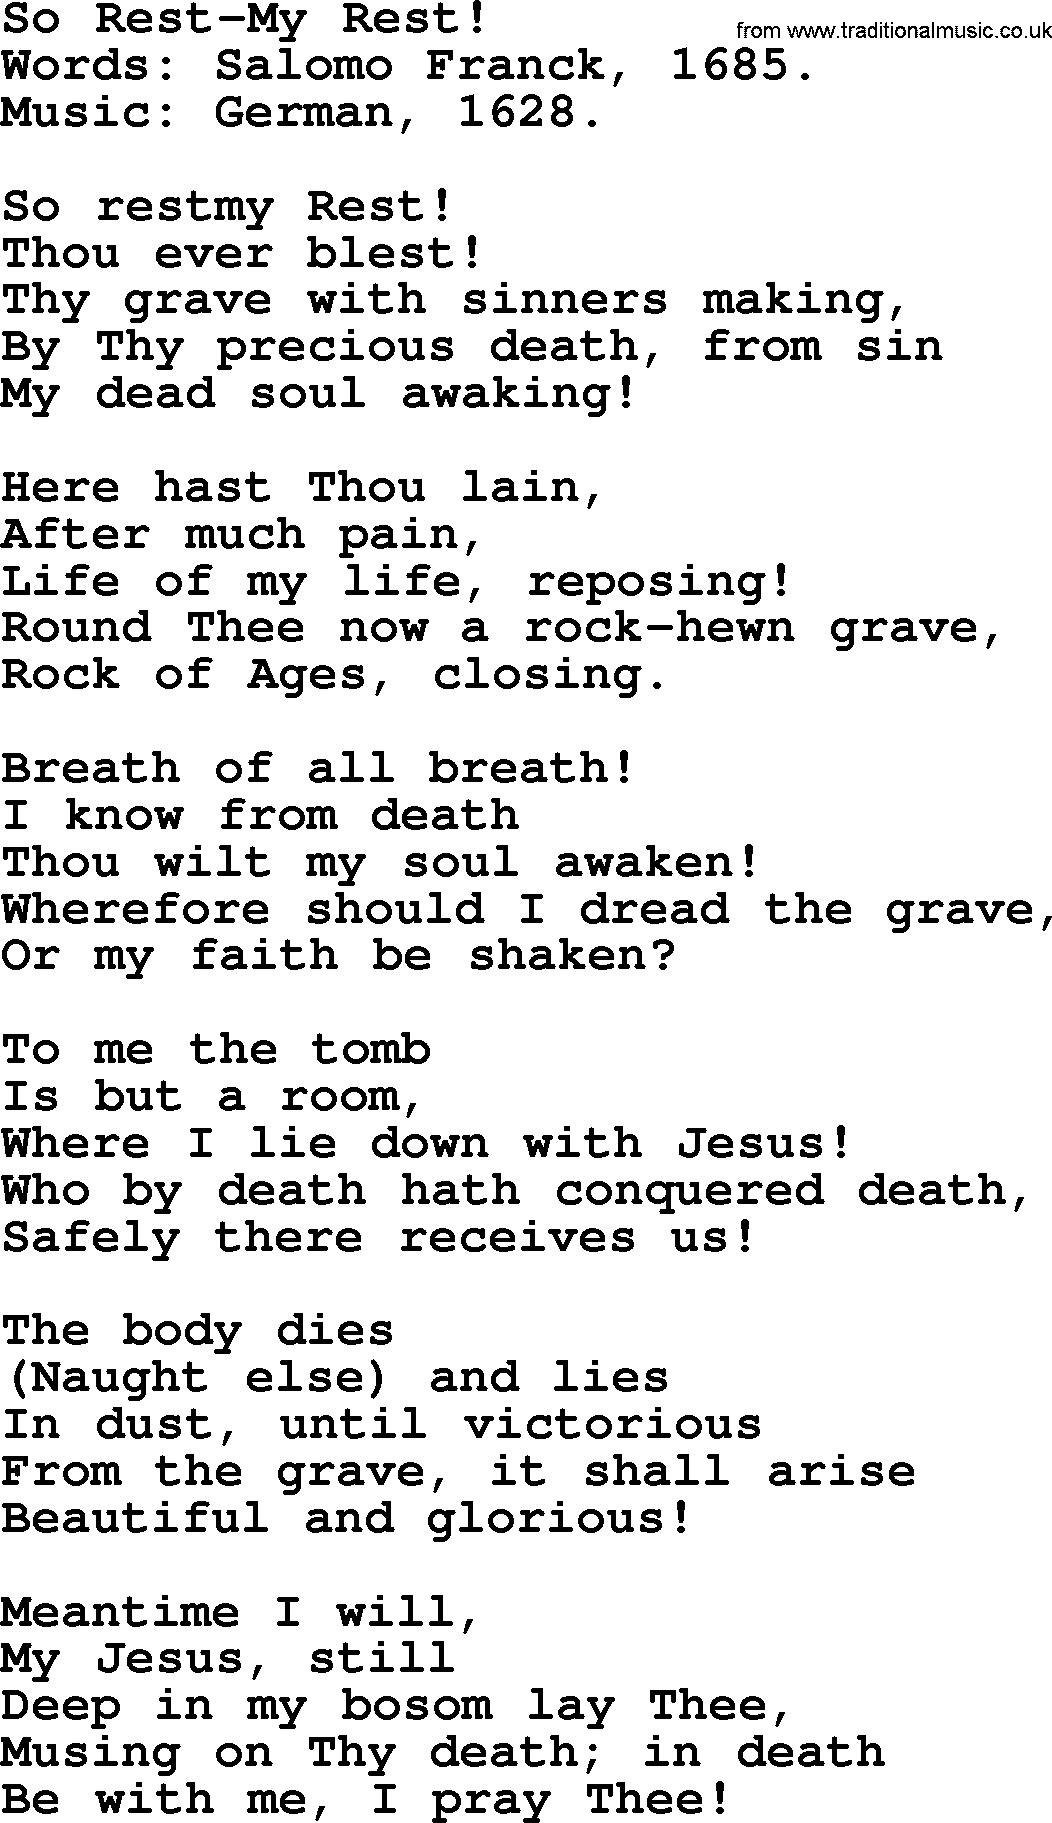 Easter Hymns, Hymn: So Rest-my Rest!, lyrics with PDF